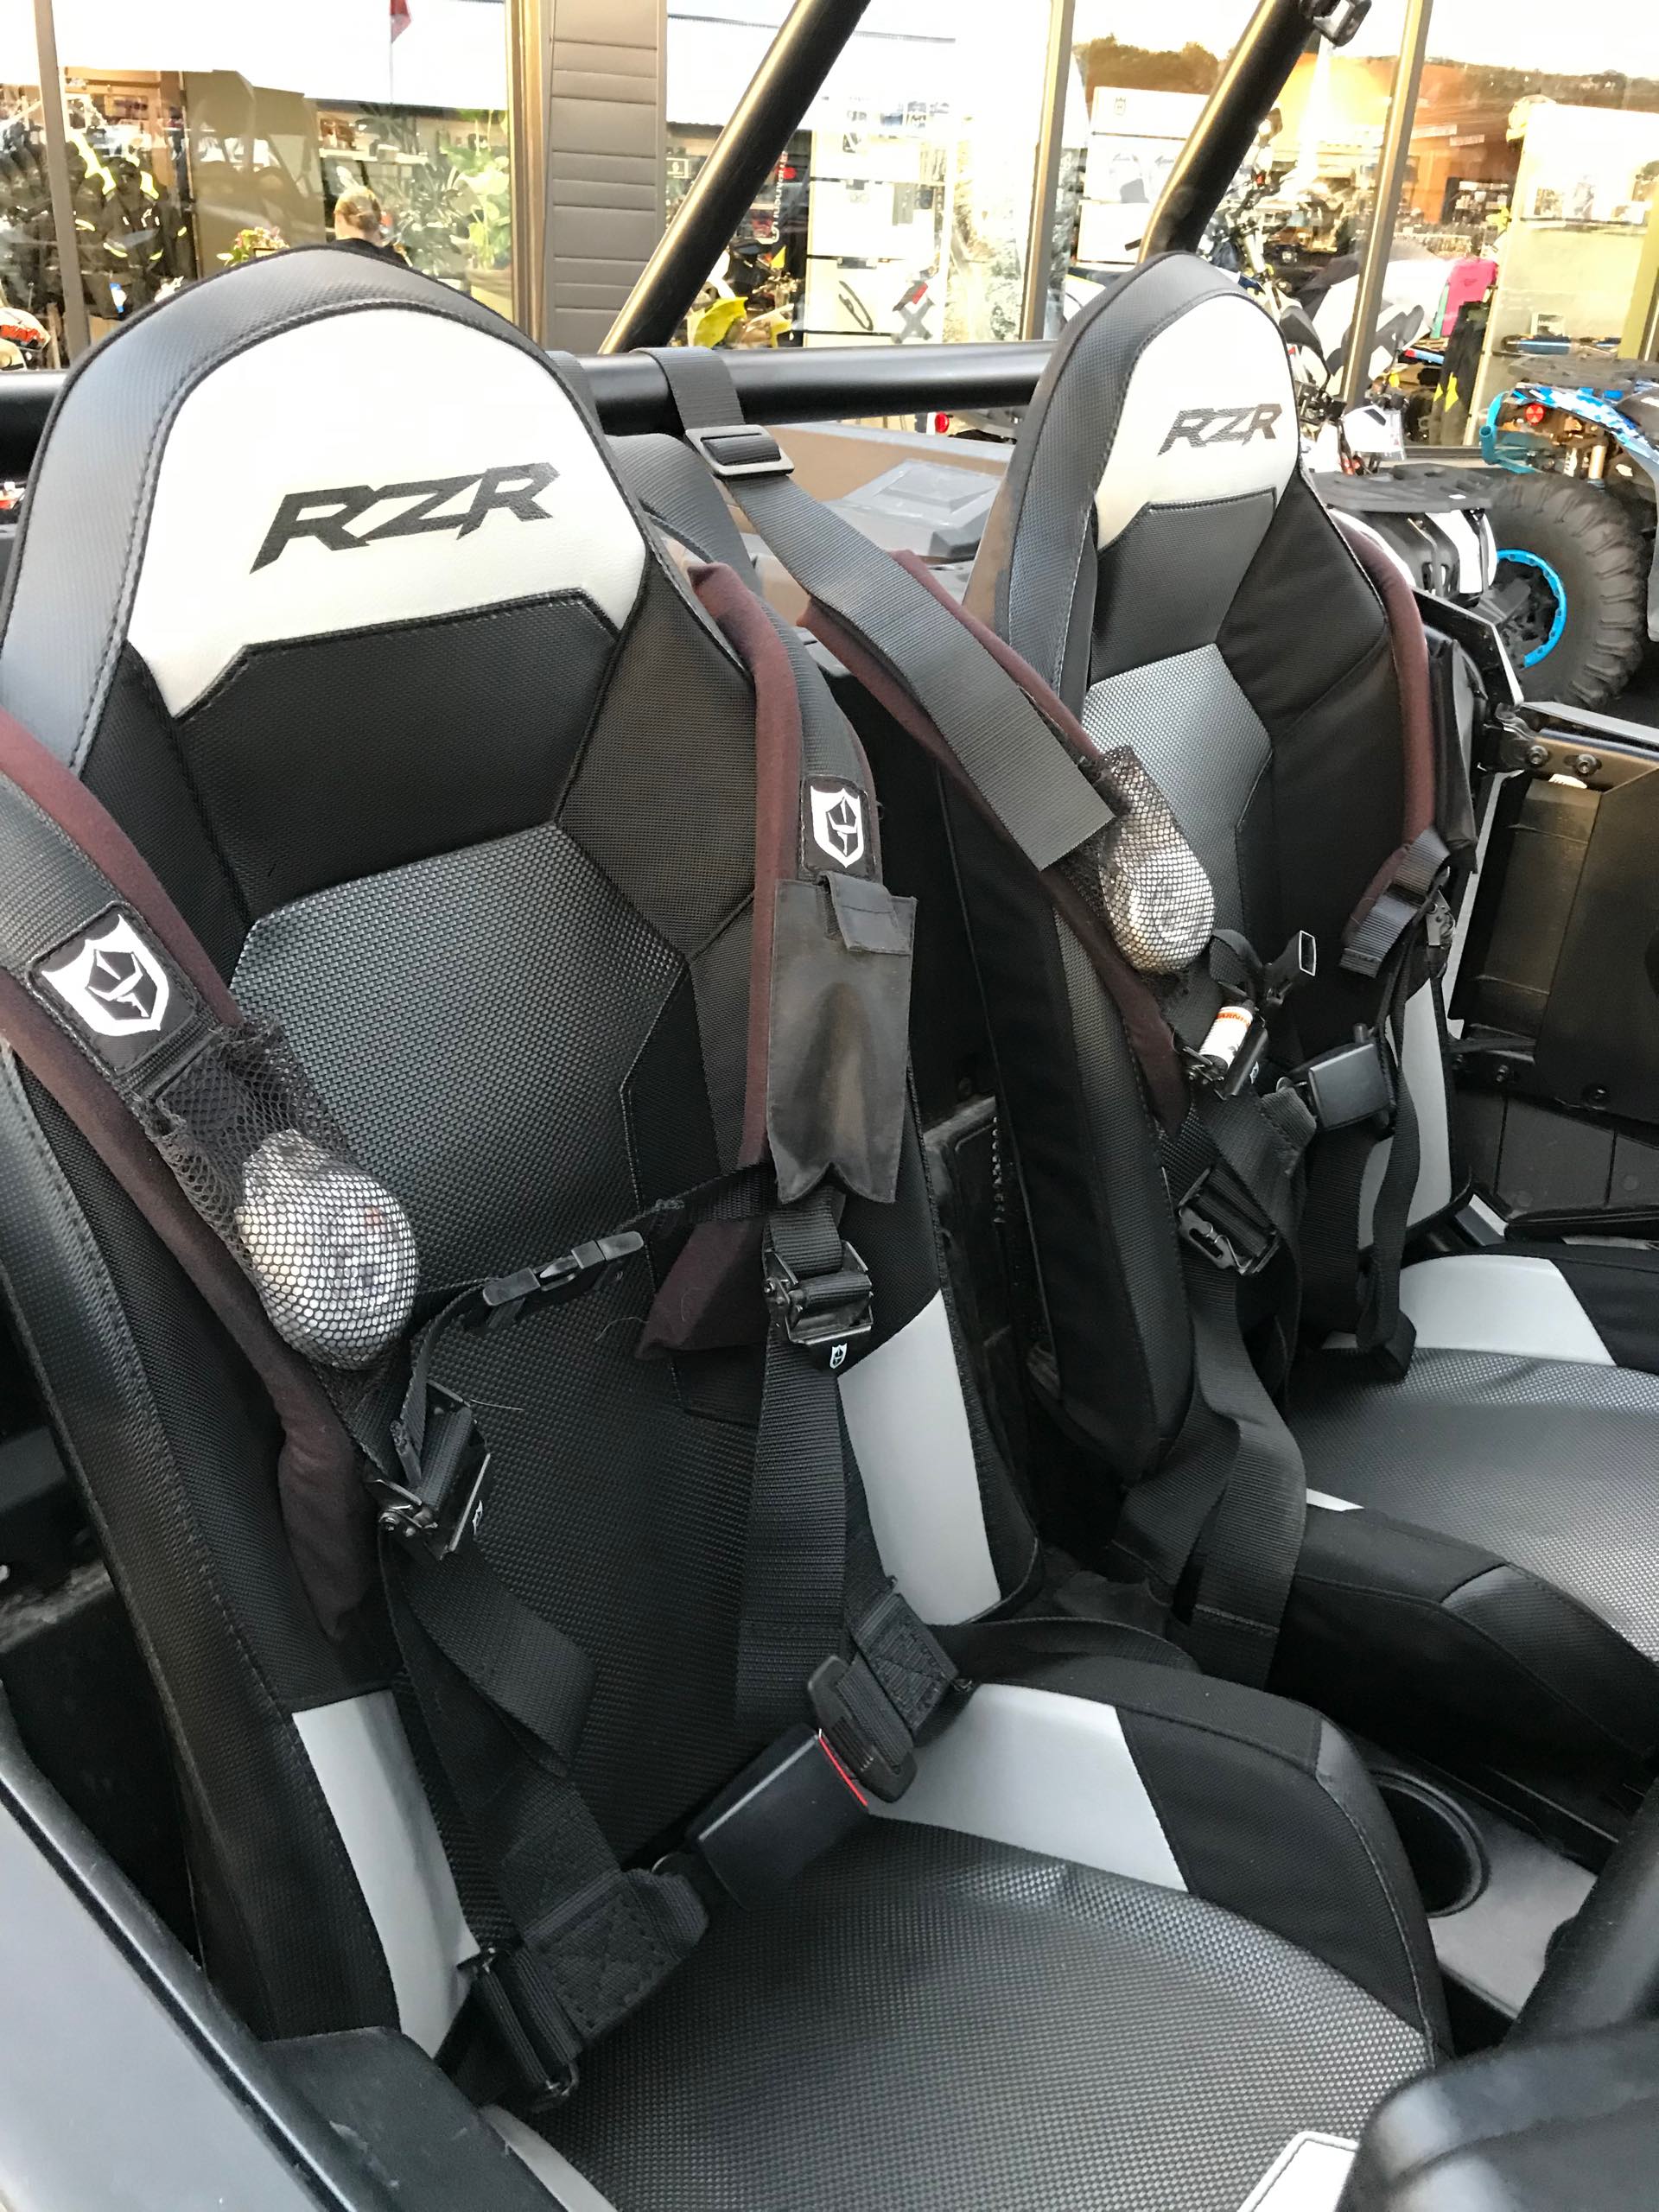 2021 Polaris RZR XP 4 1000 Premium at Guy's Outdoor Motorsports & Marine